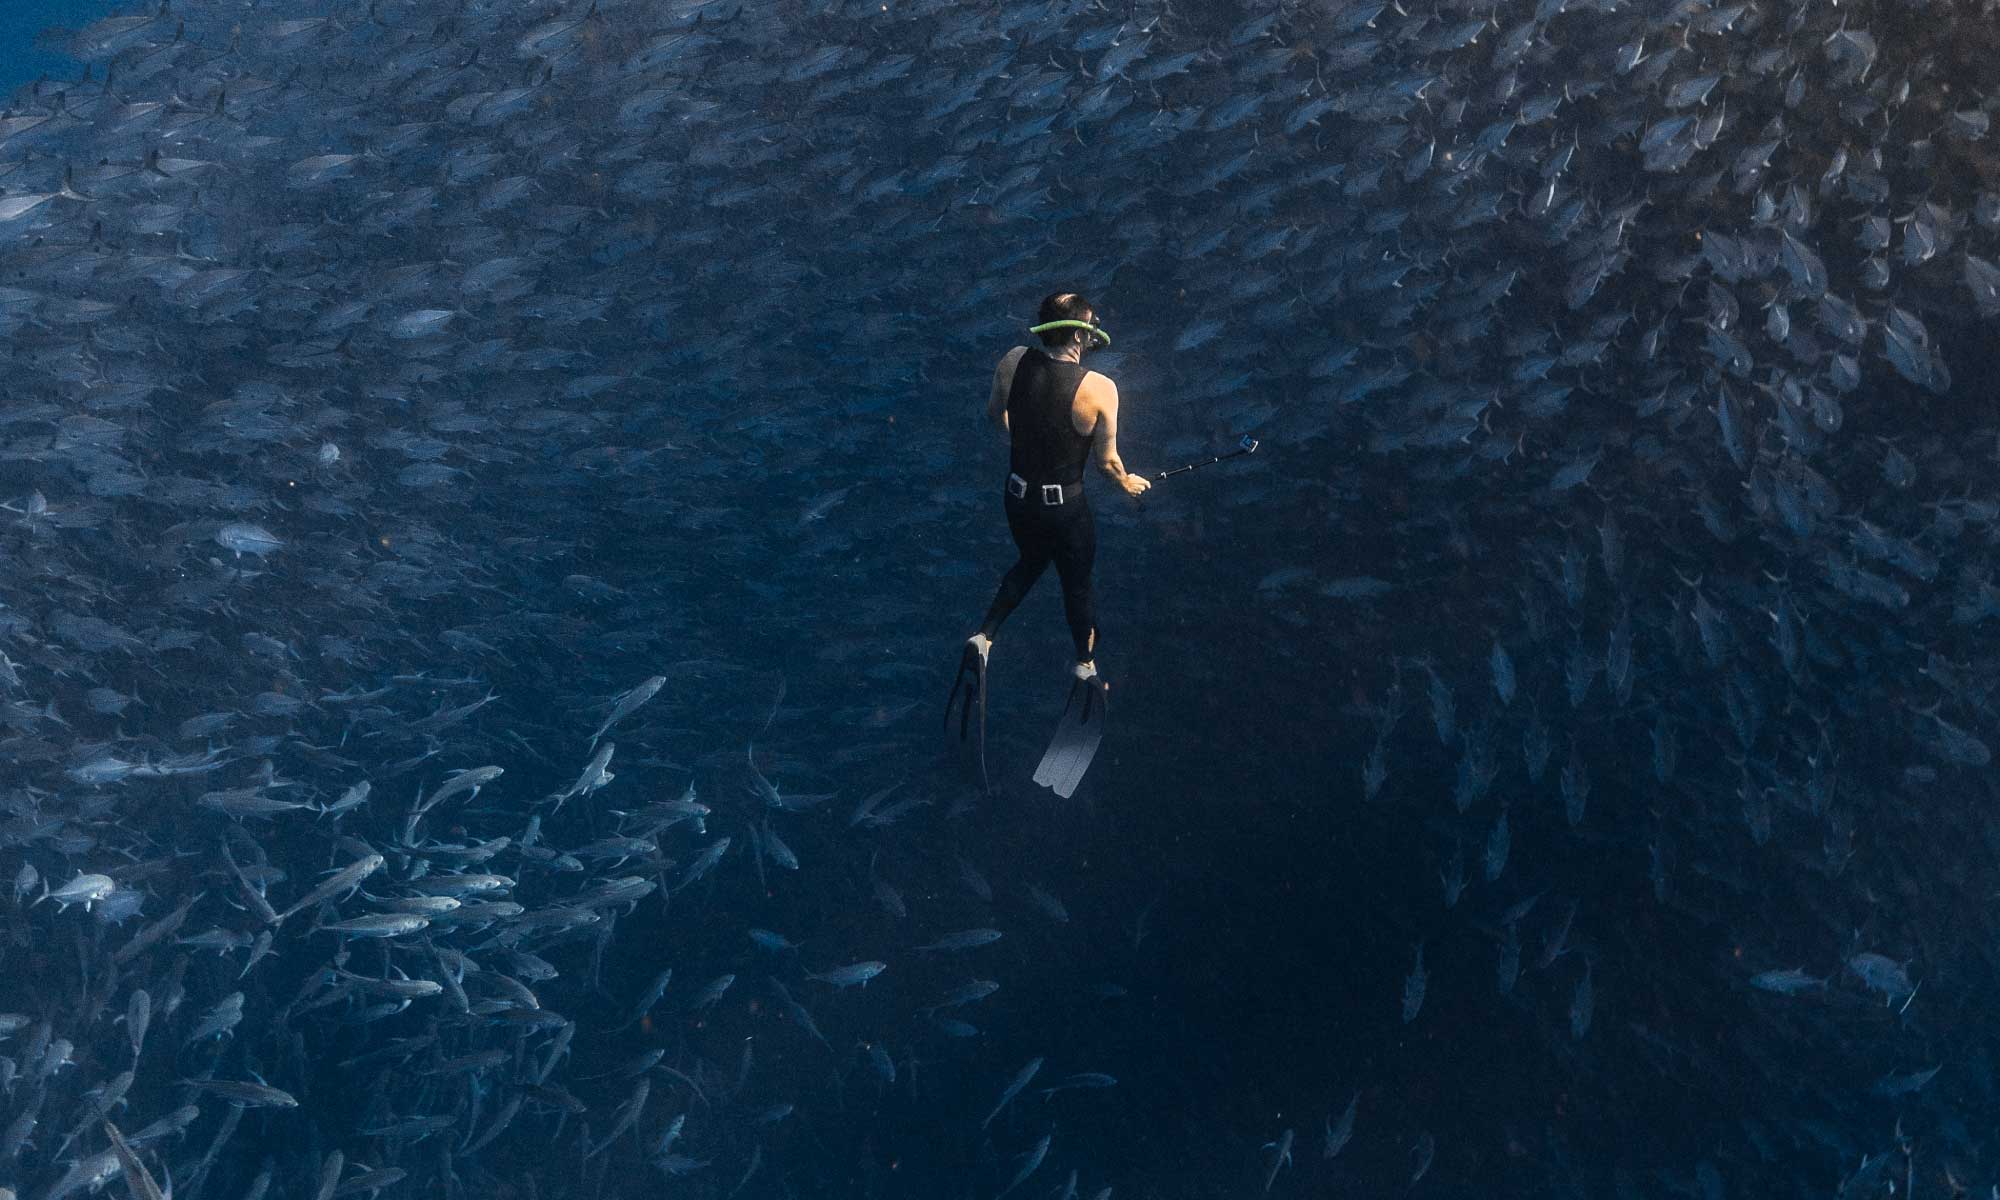 Sea of Cortez Tpurs - Diver & Tornado Fish